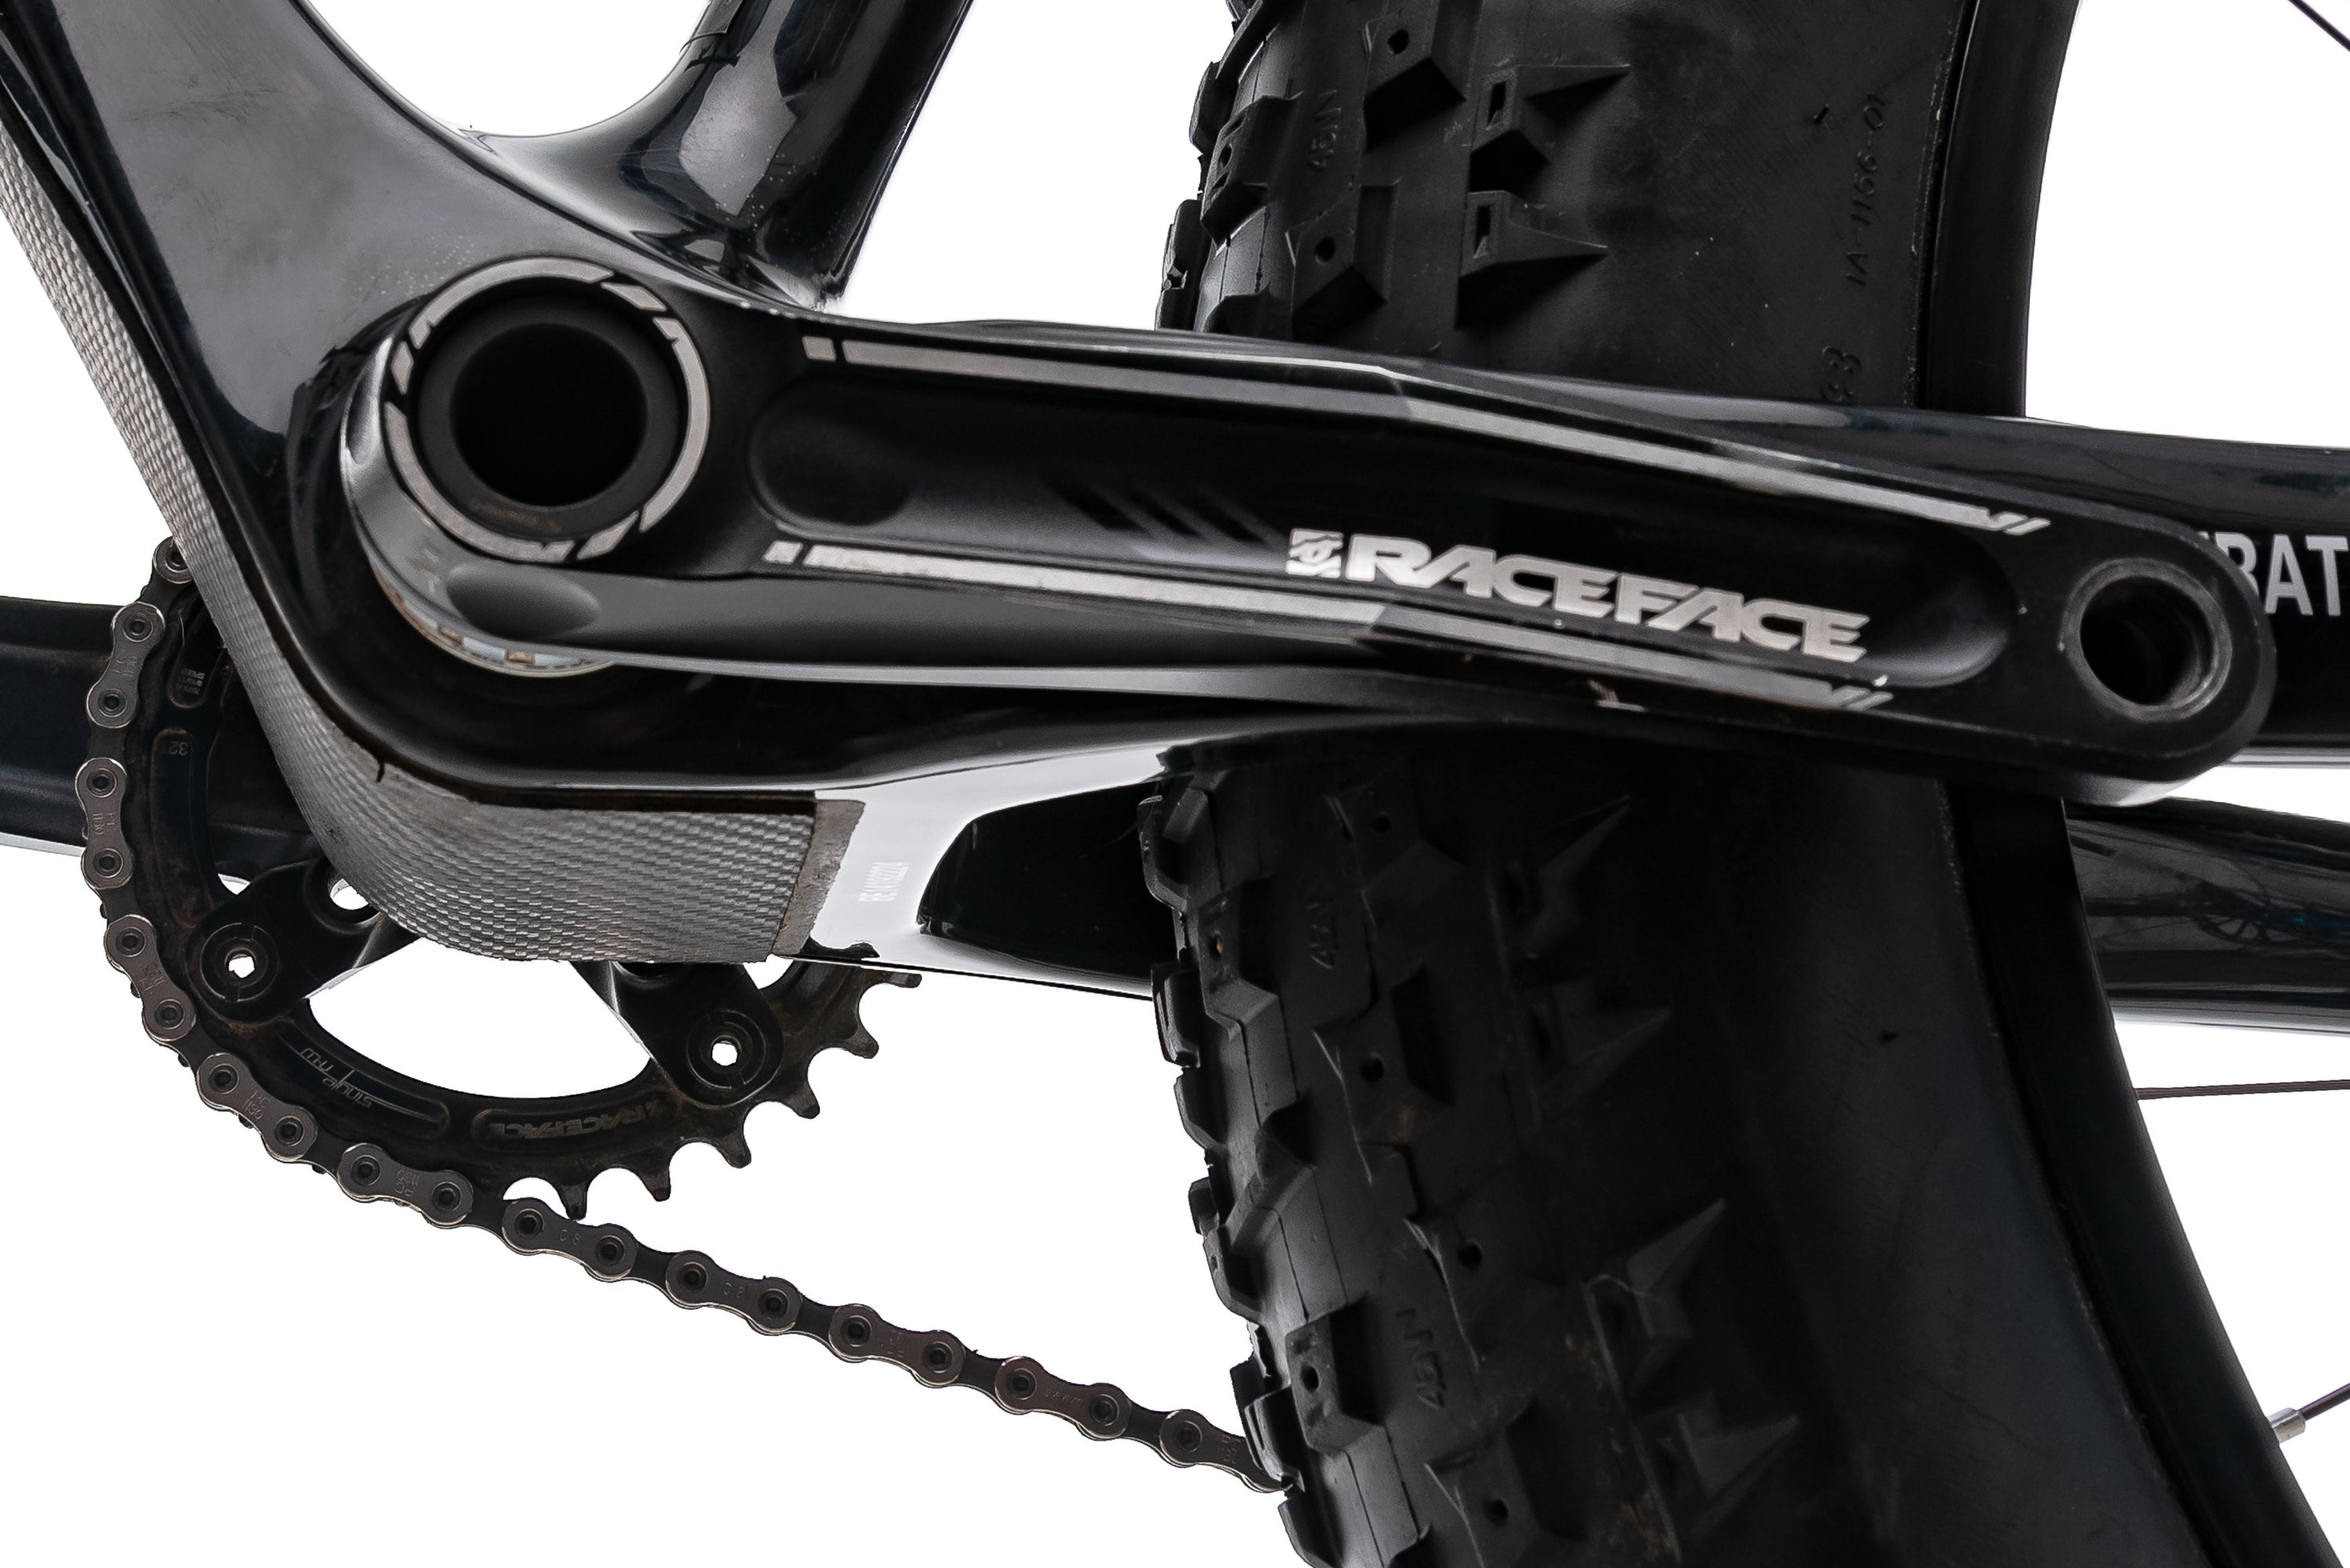 Boreals Echo X01 Mountain Bike - 2015, Large crank